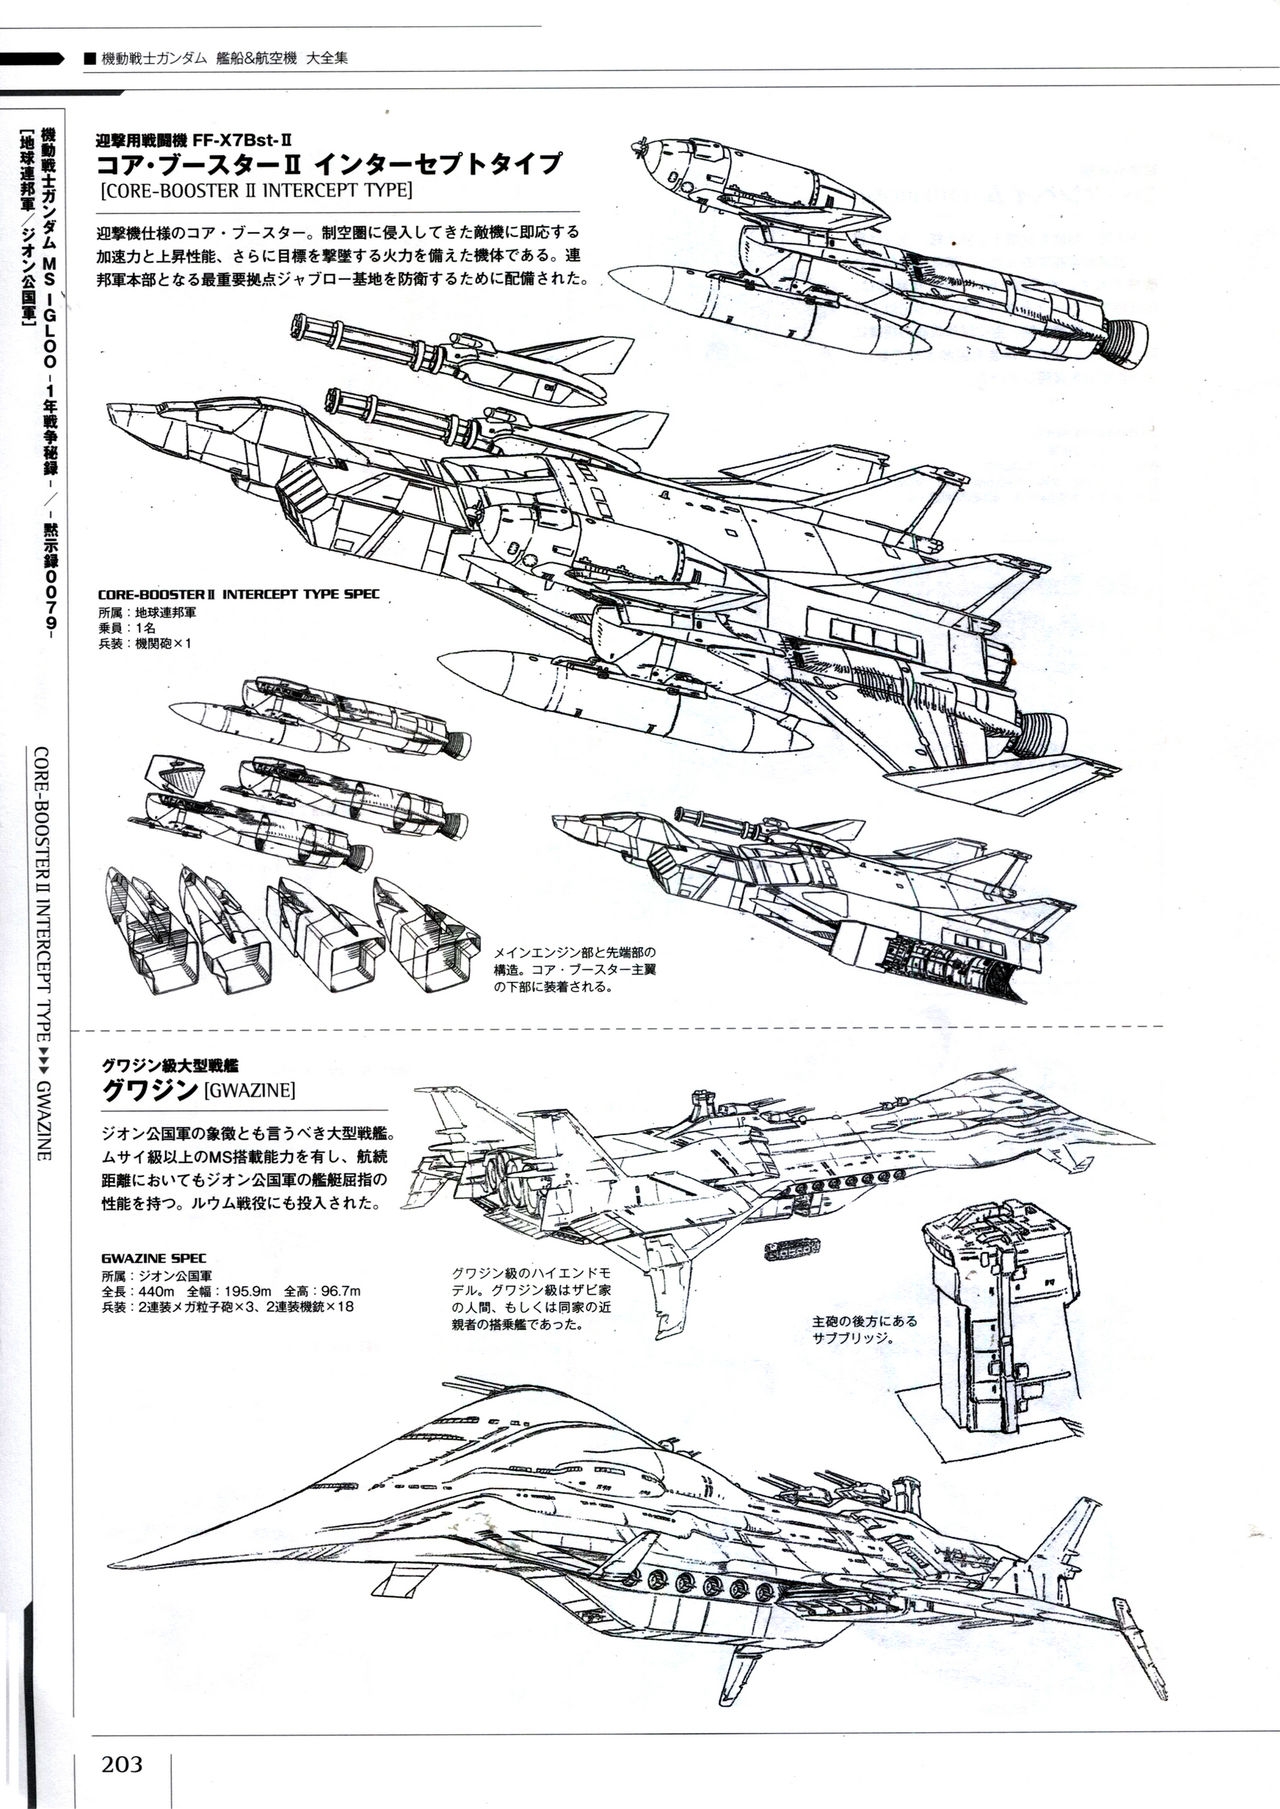 Mobile Suit Gundam - Ship & Aerospace Plane Encyclopedia - Revised Edition 208